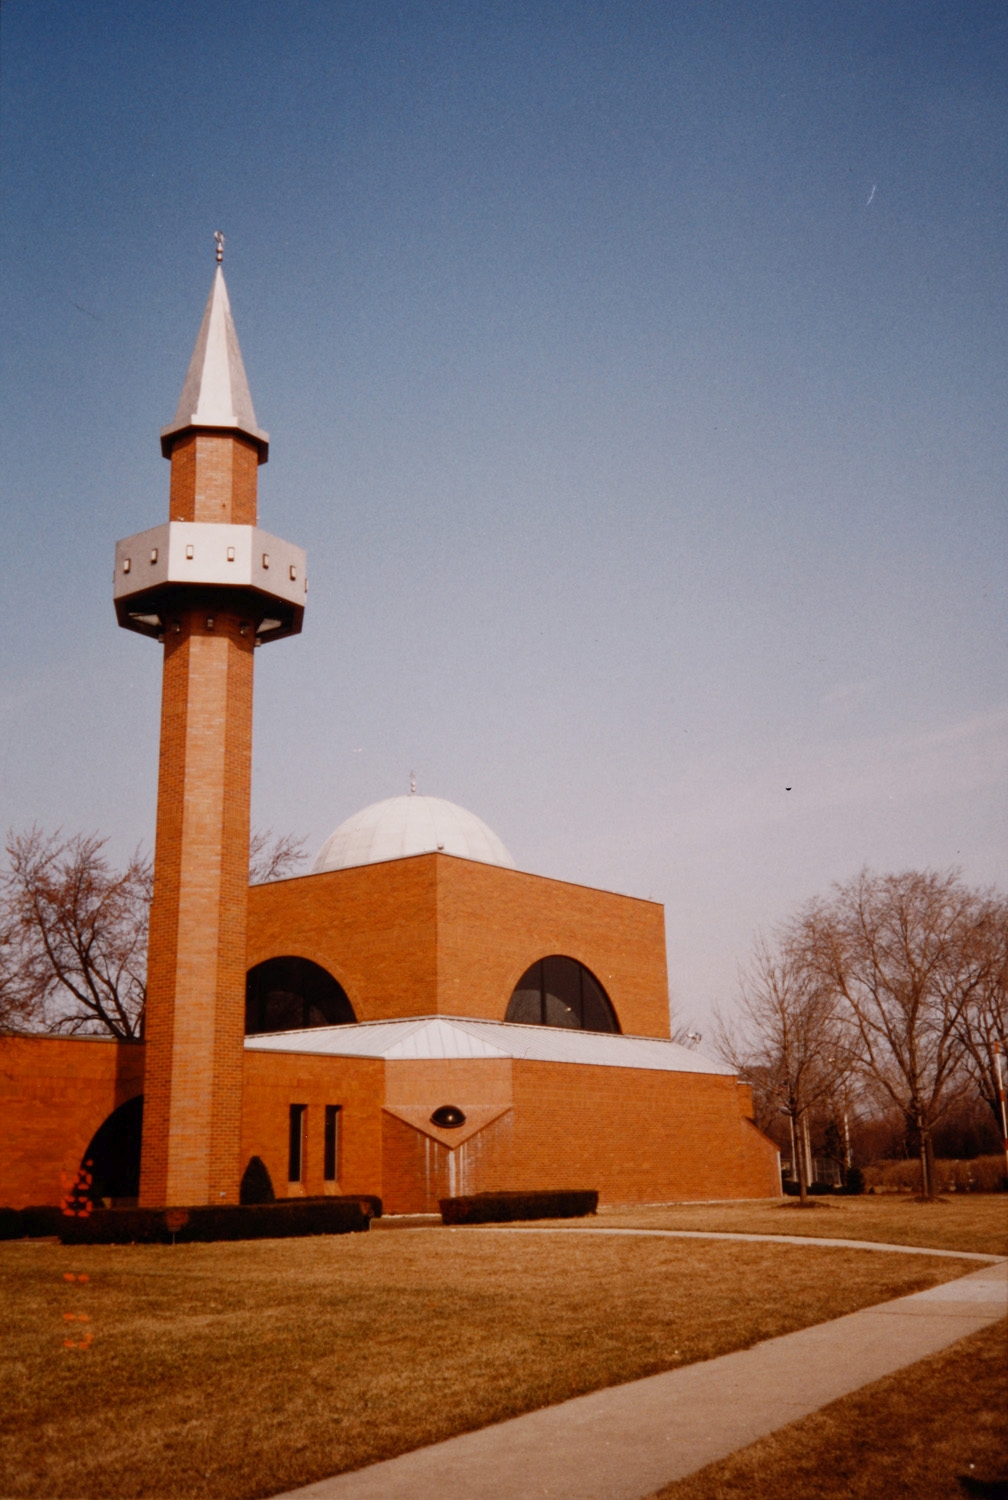 Minaret and exterior of prayer hall, looking north